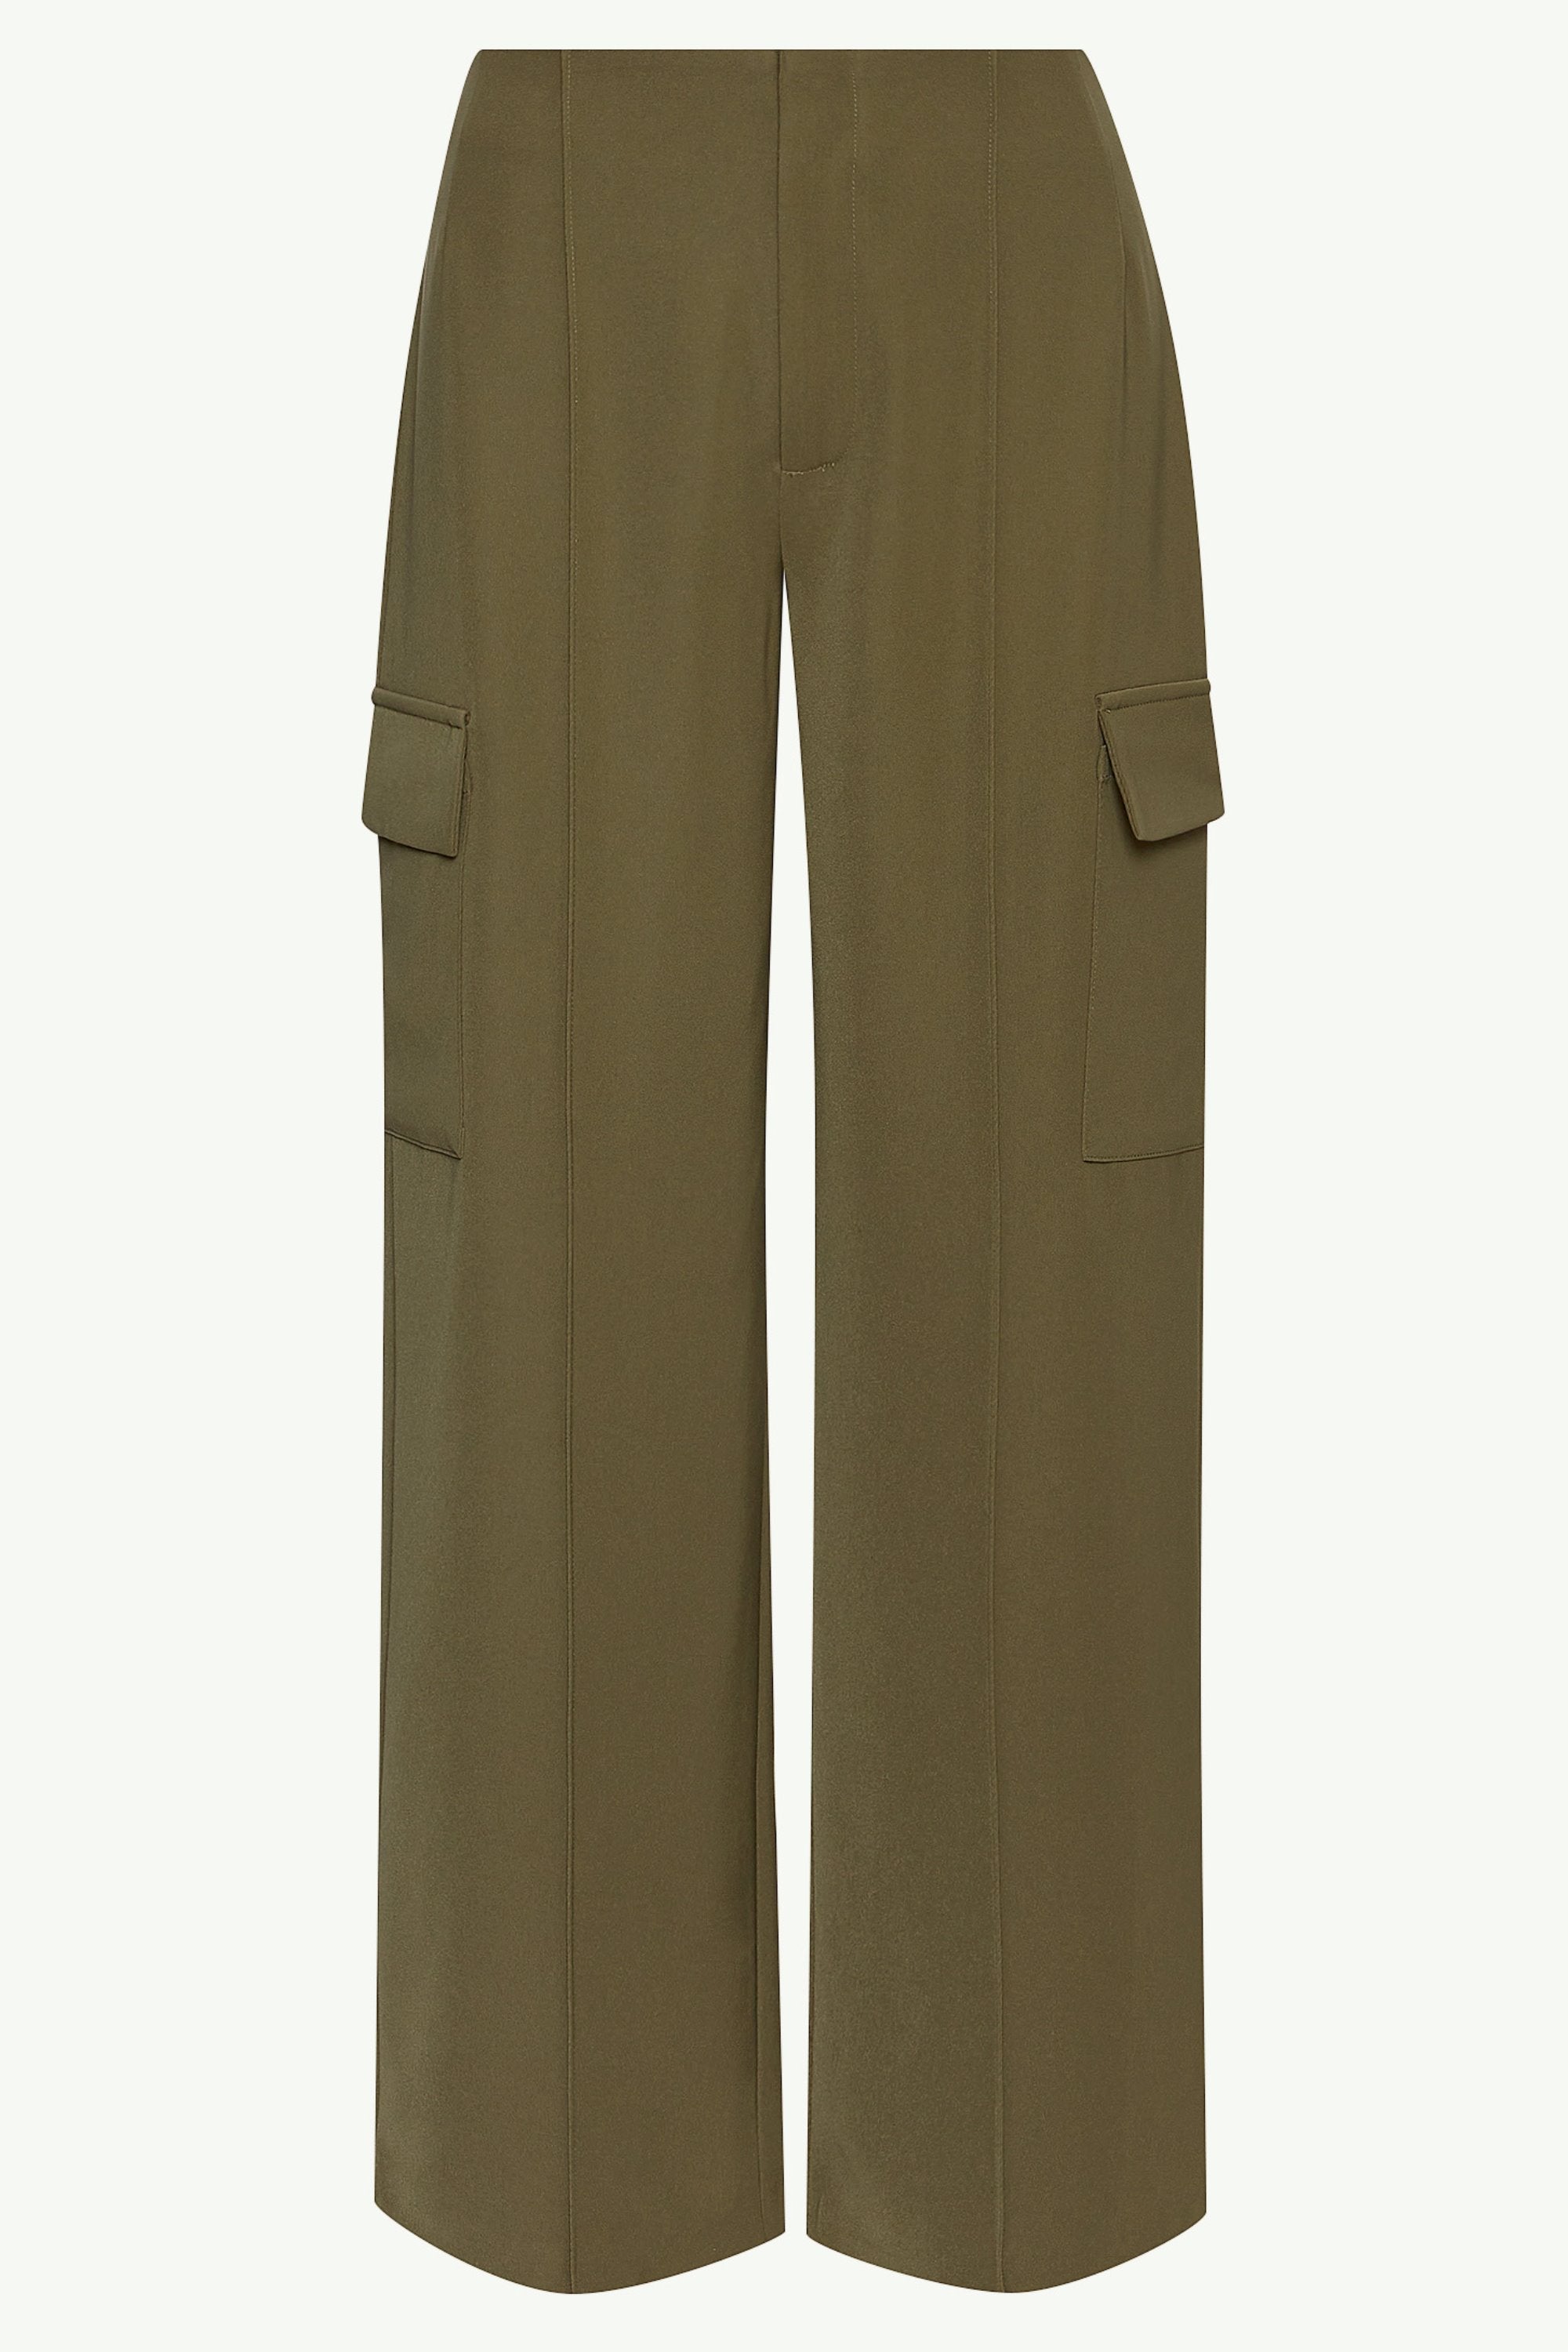 Rumer Wide Leg Cargo Pants - Olive Clothing epschoolboard 